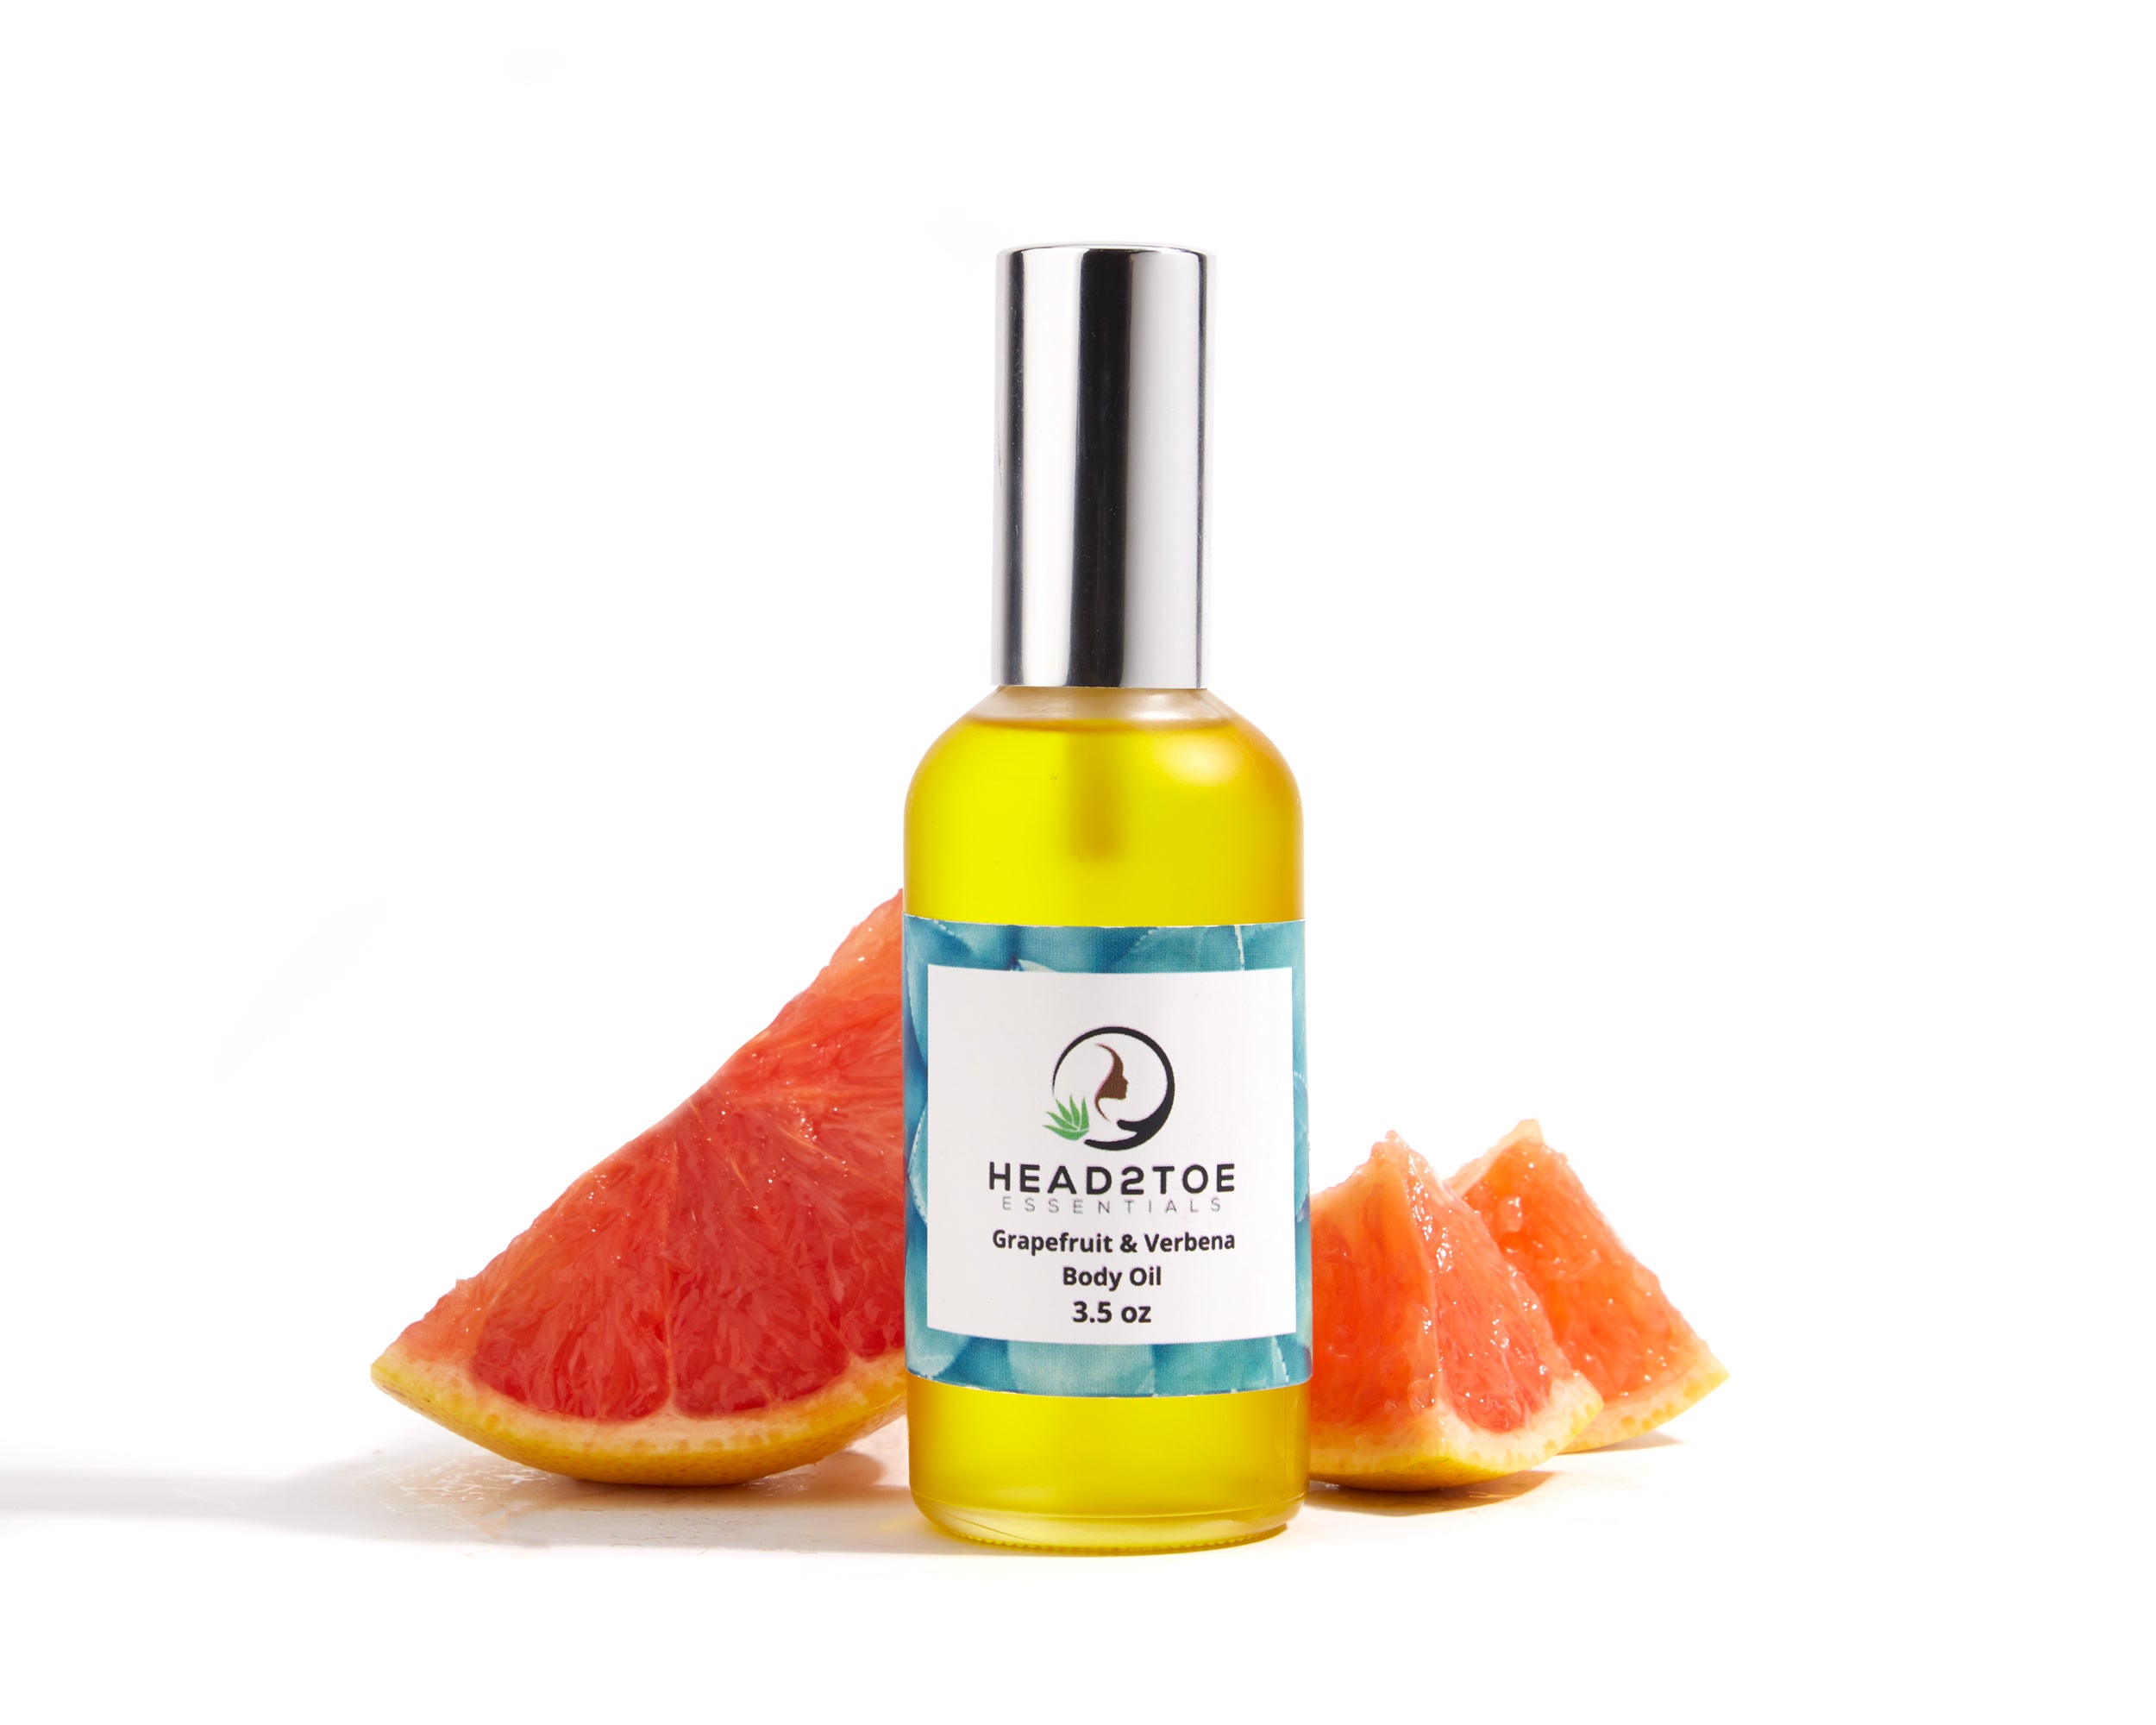 Grapefruit and Verbena Body Oil